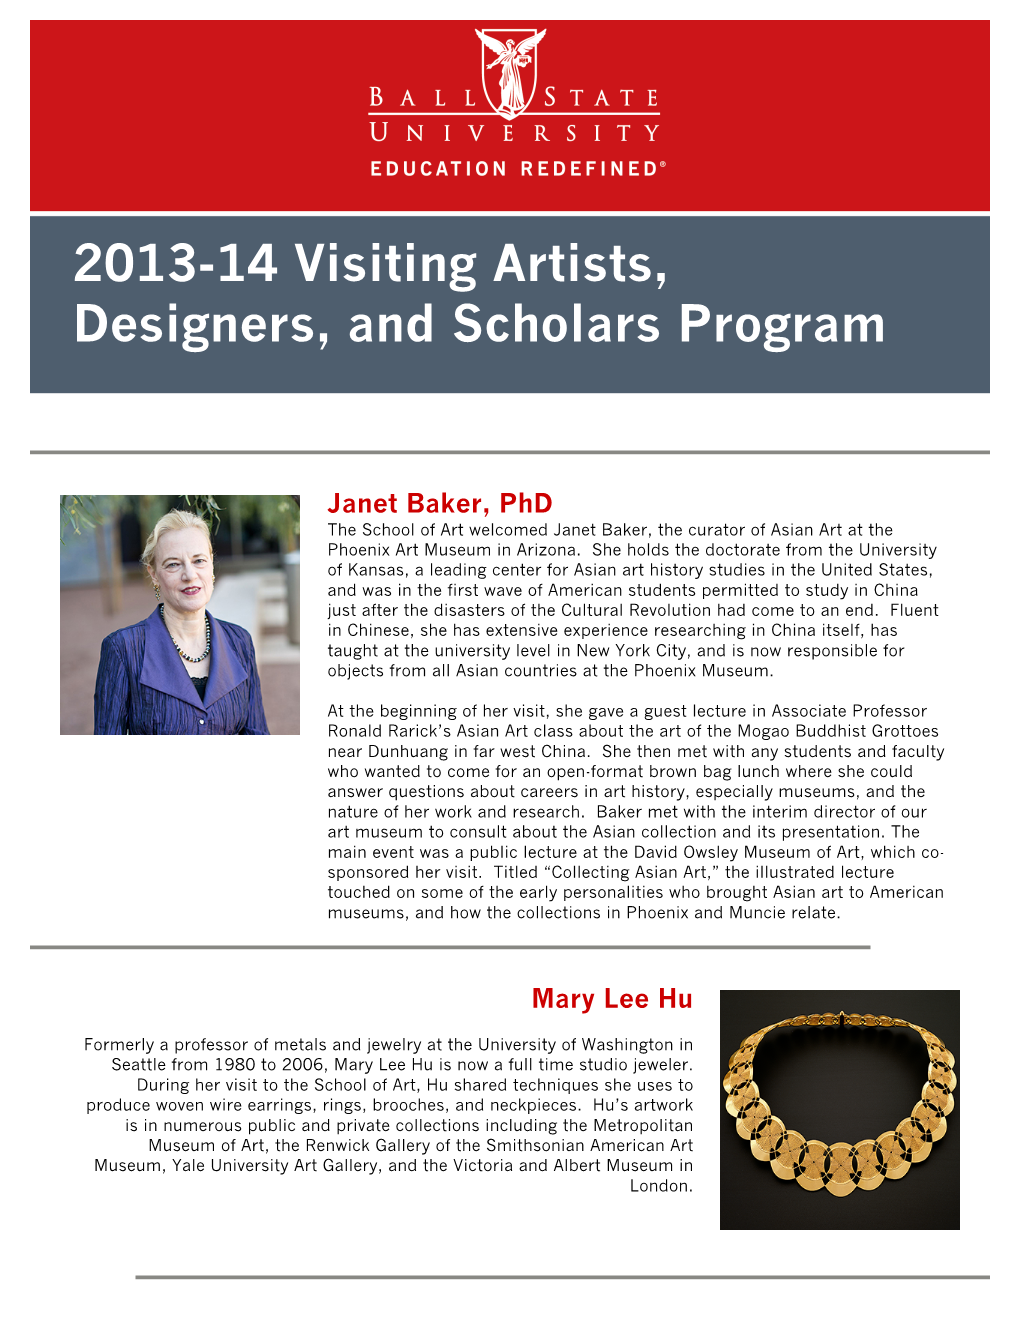 2013-2014 Visiting Artists, Designers, and Scholars Program